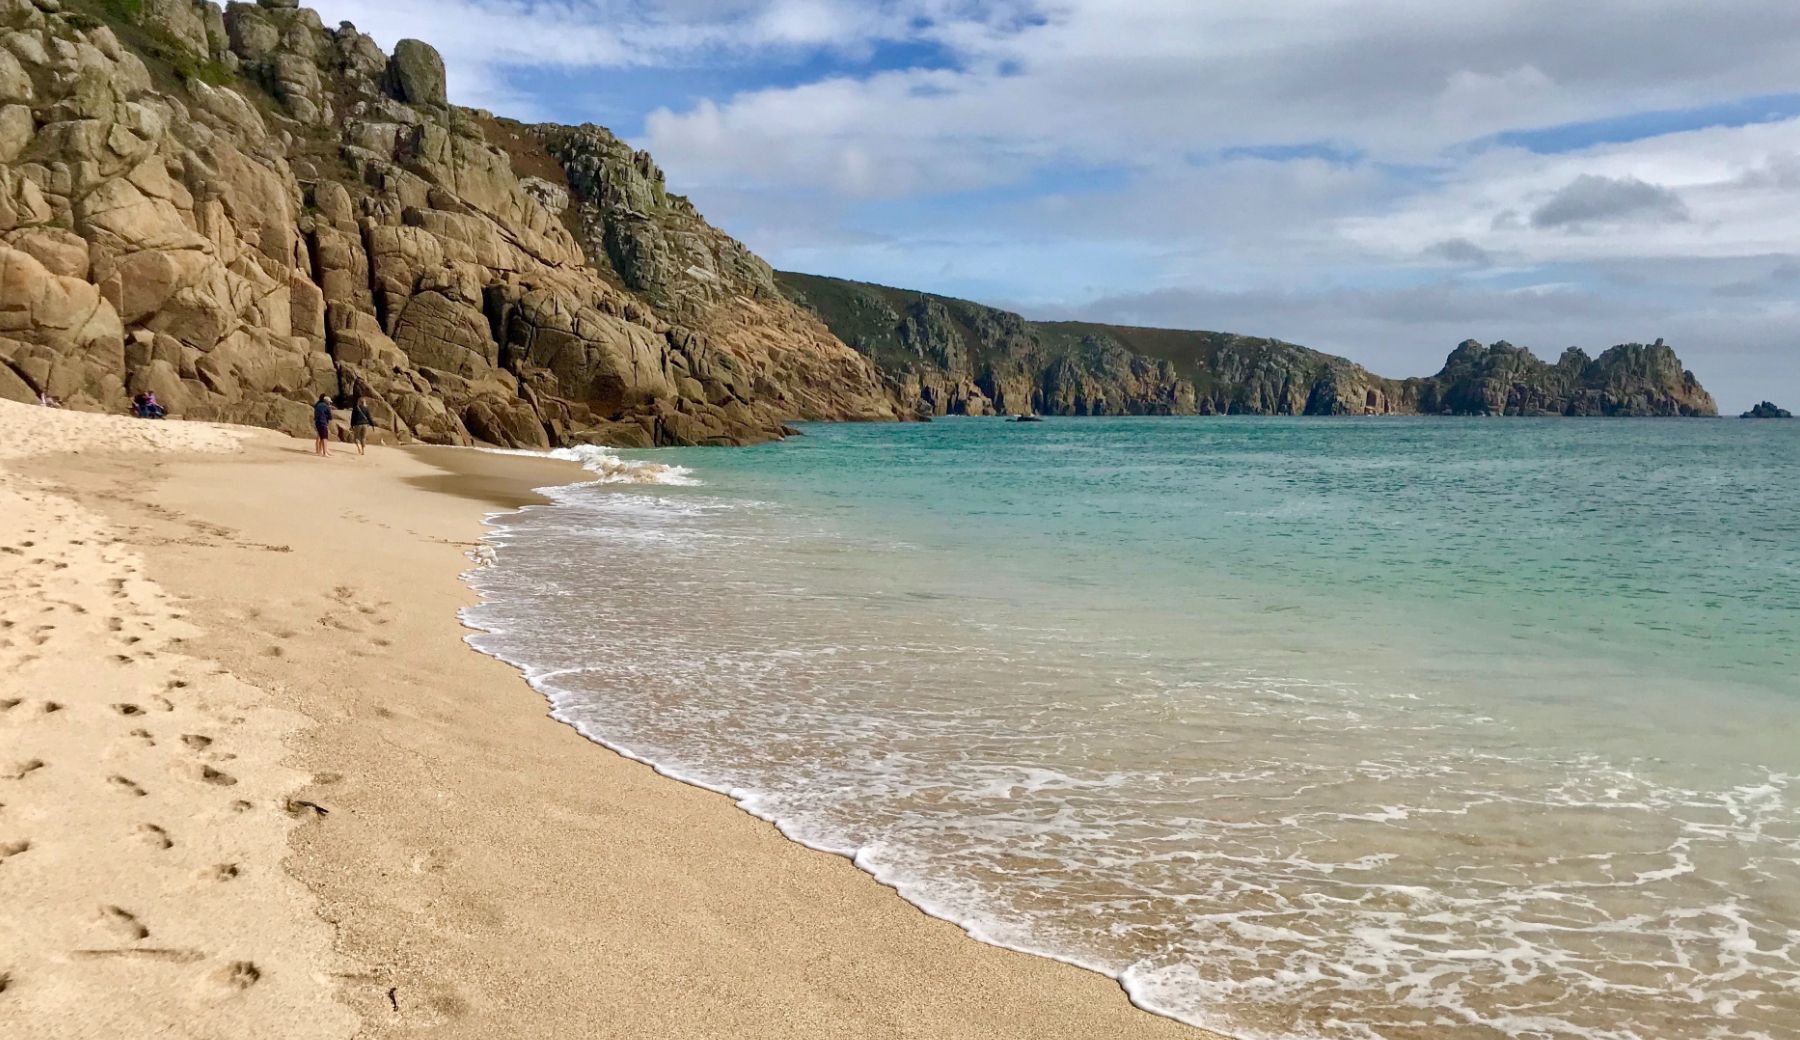 Cornwall beaches - image of a Cornish beach